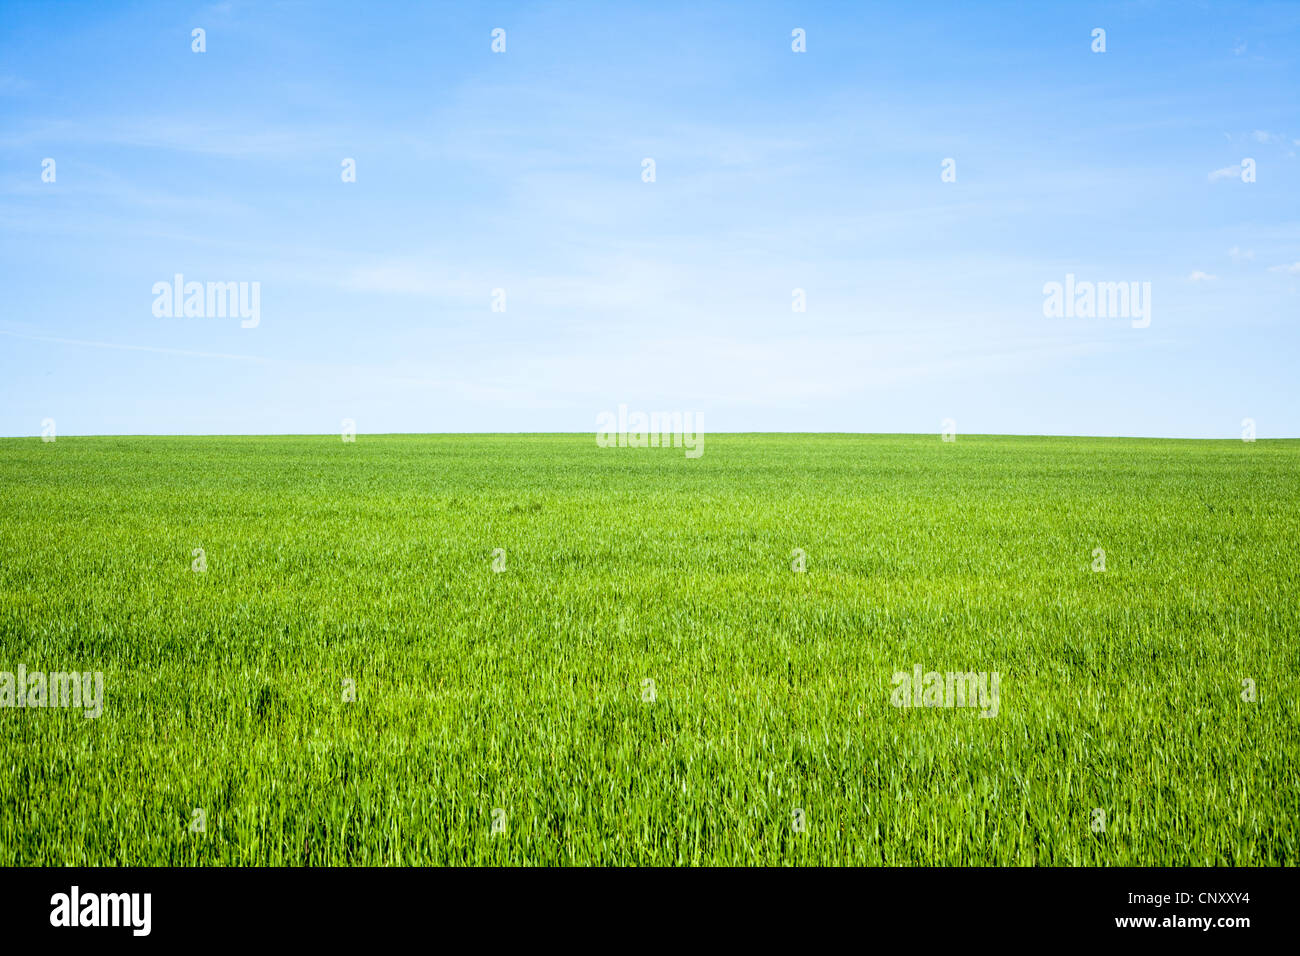 Empty Grass Field with Blue Sky Stock Photo